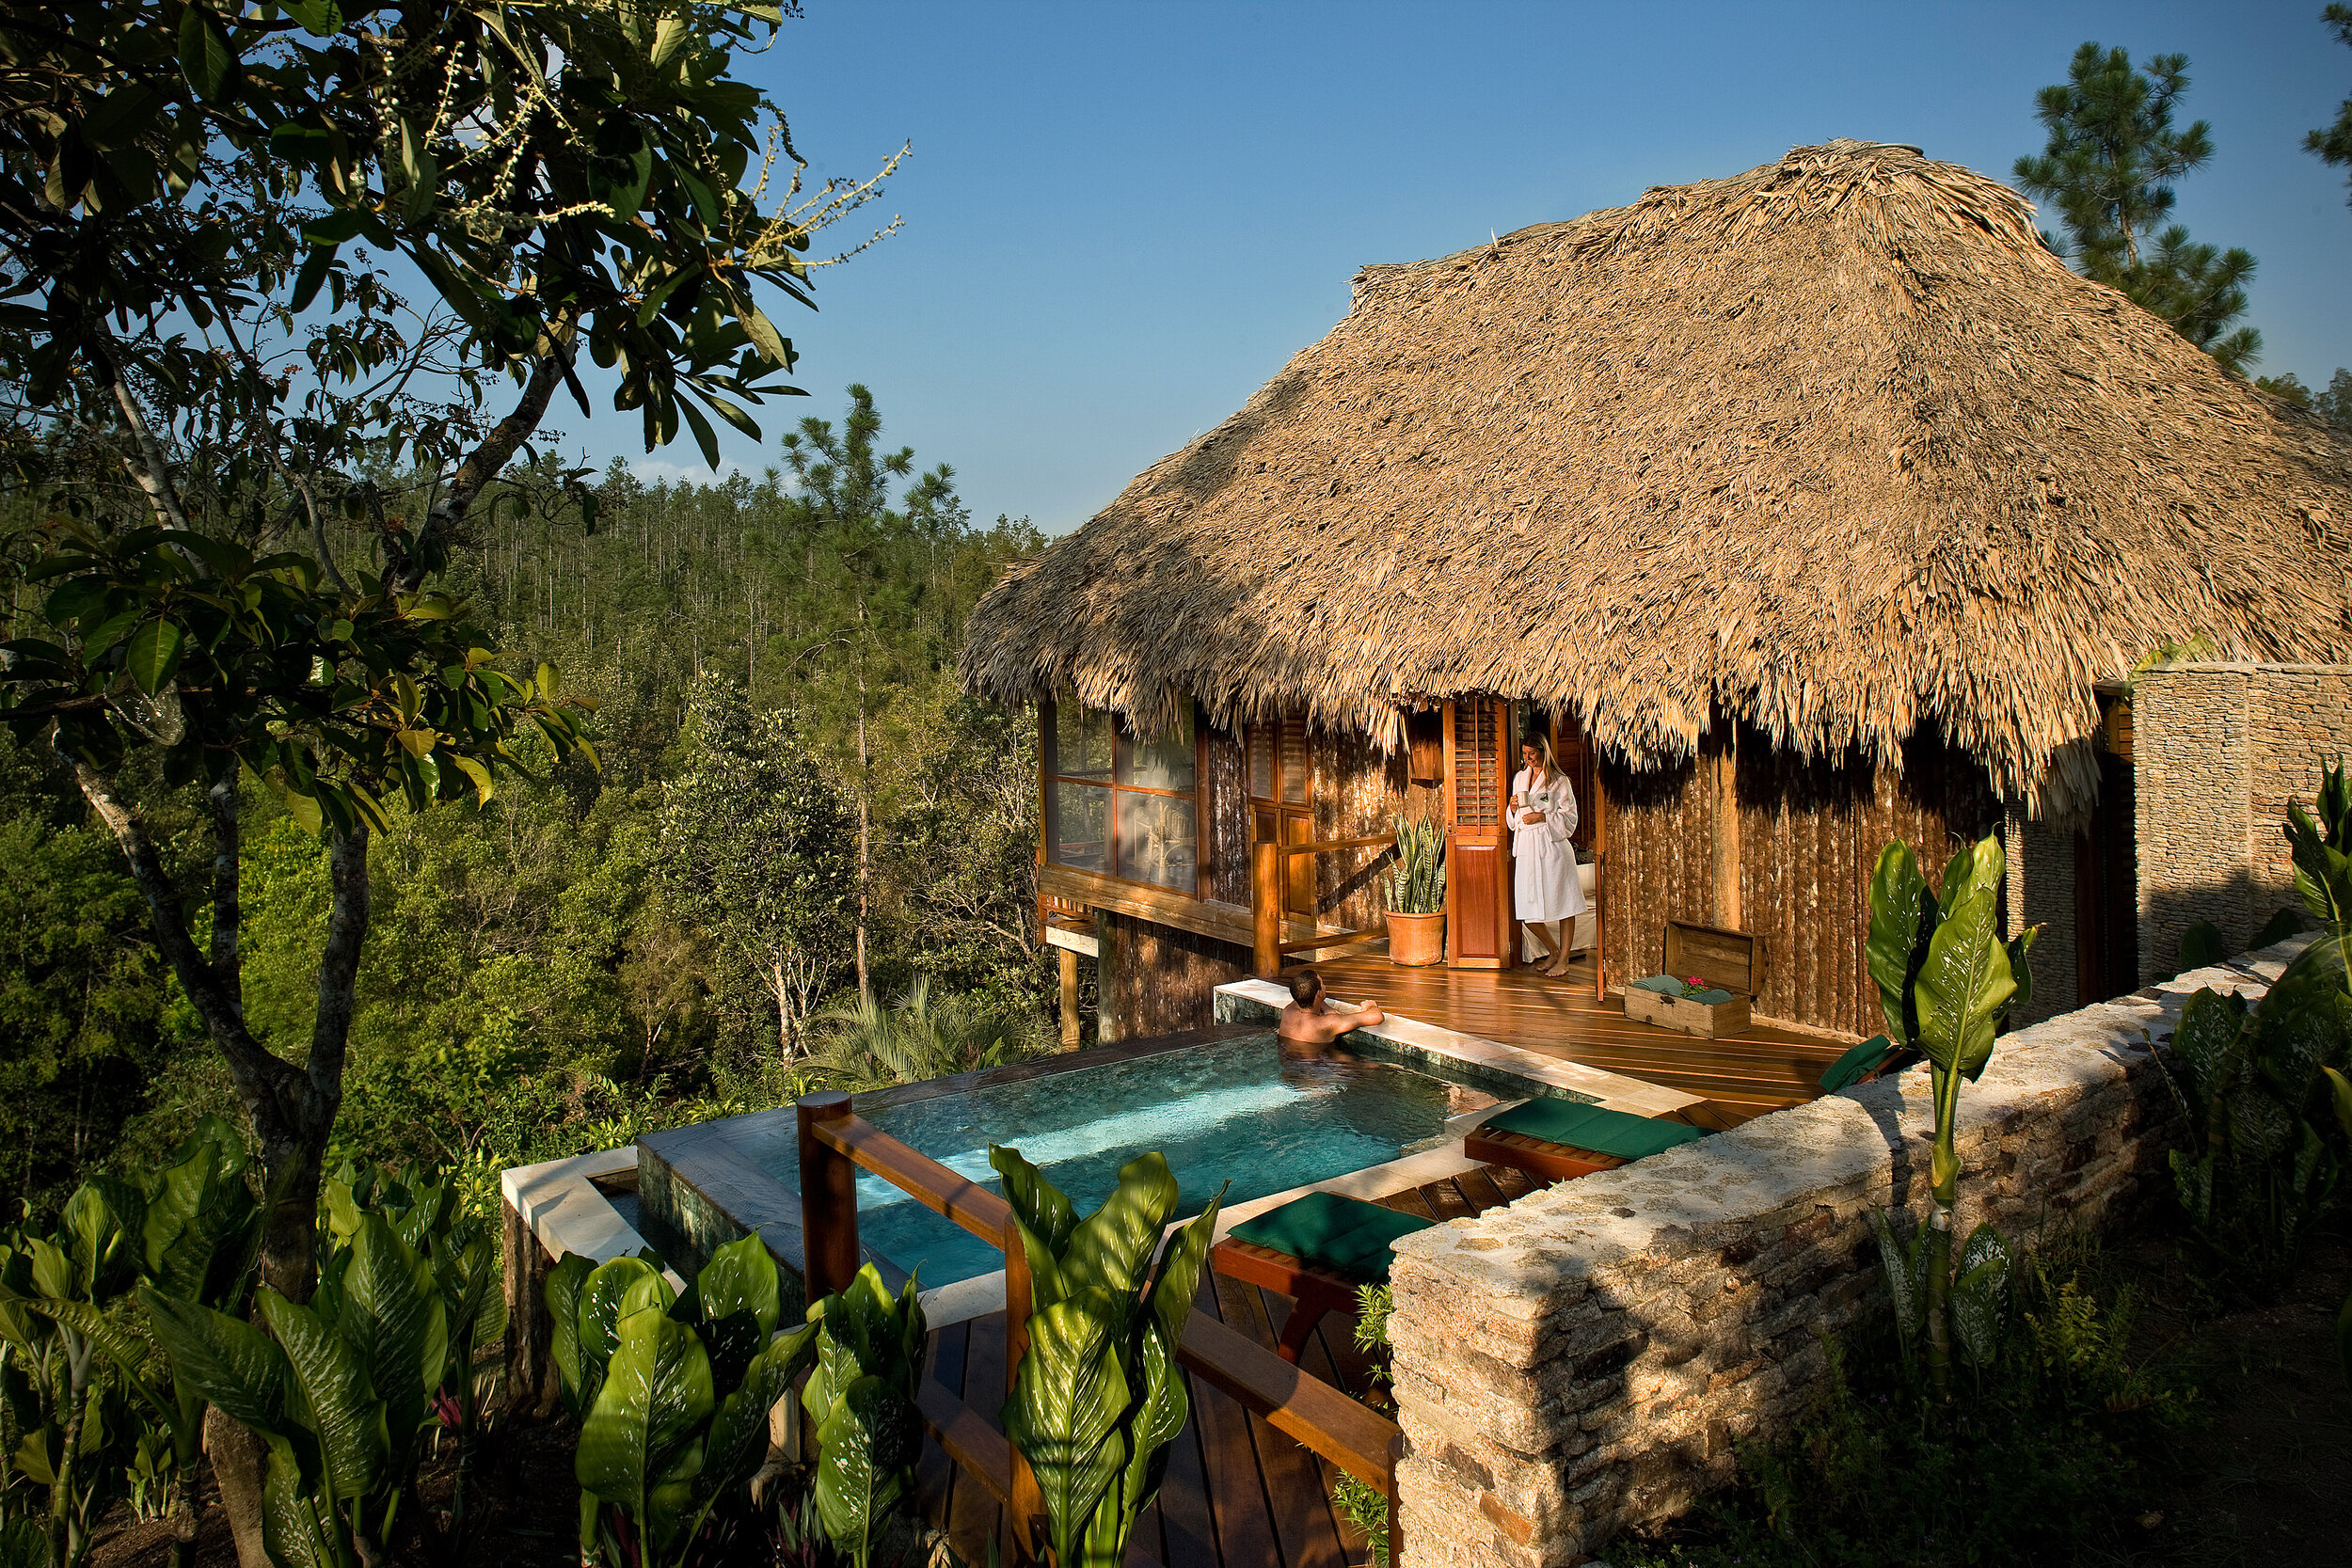   Luxury Cabana at Blancaneaux Lodge (photo credit: The Family Coppola Hideaways)  